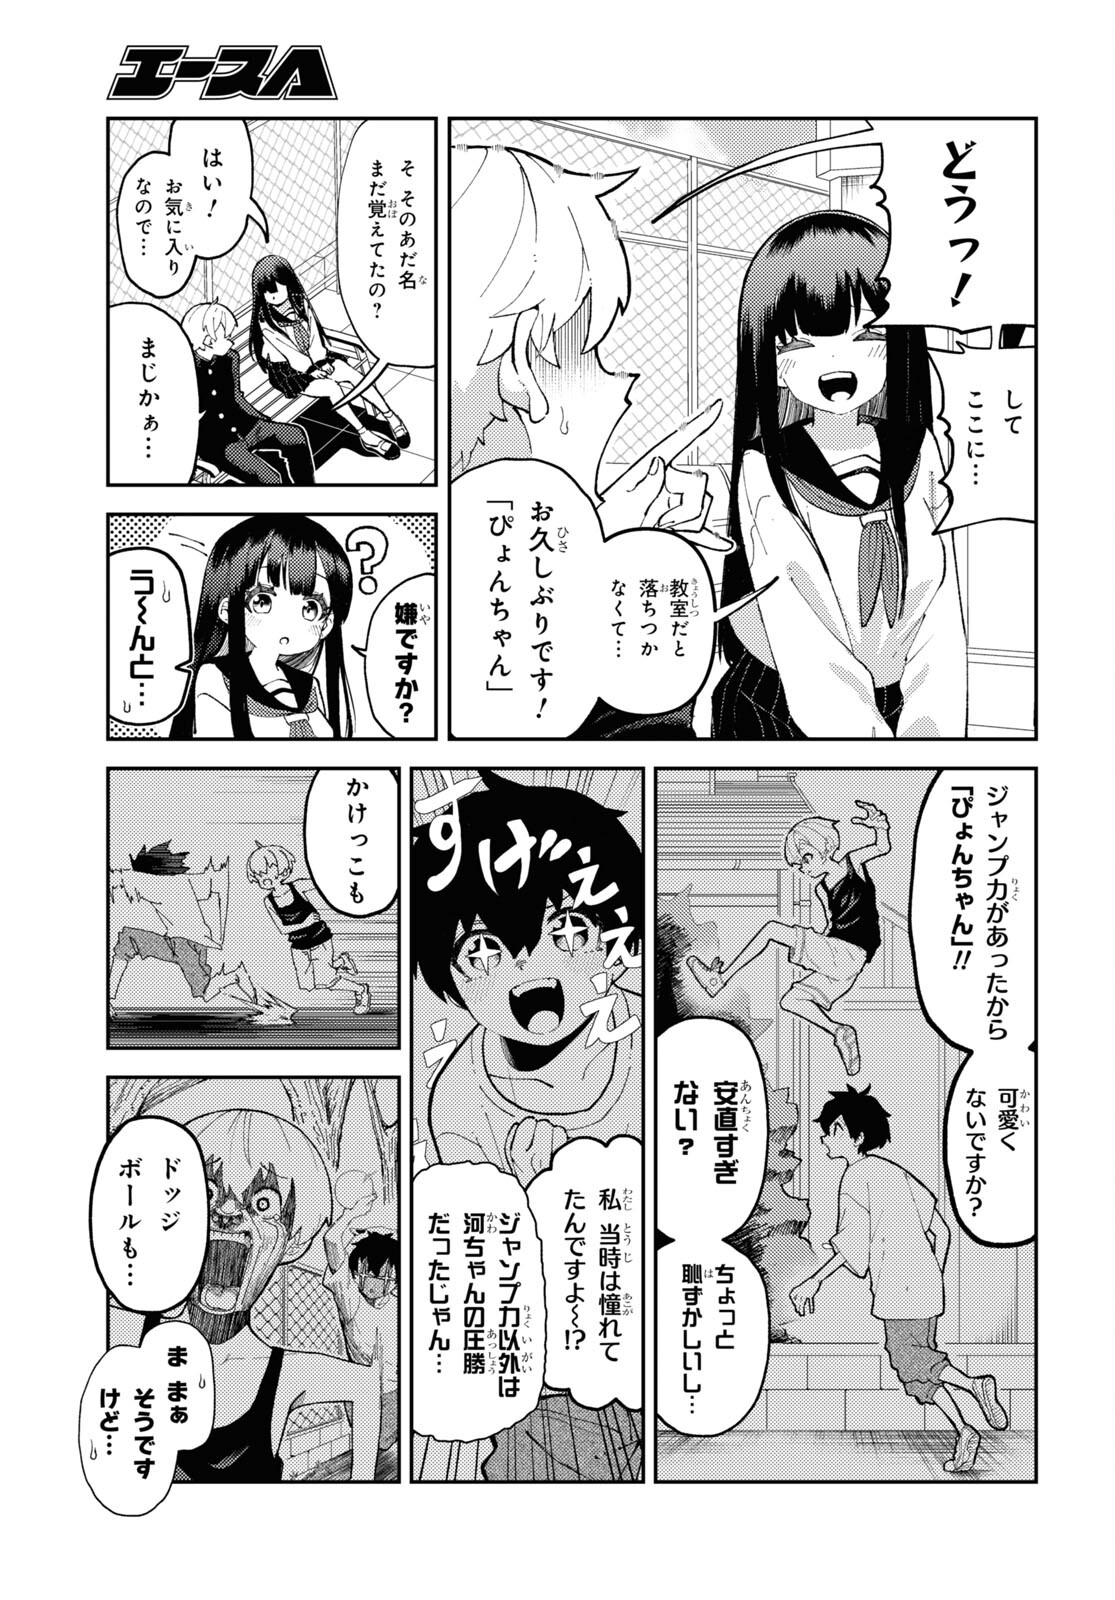 Garuru Girl - Chapter 1 - Page 8